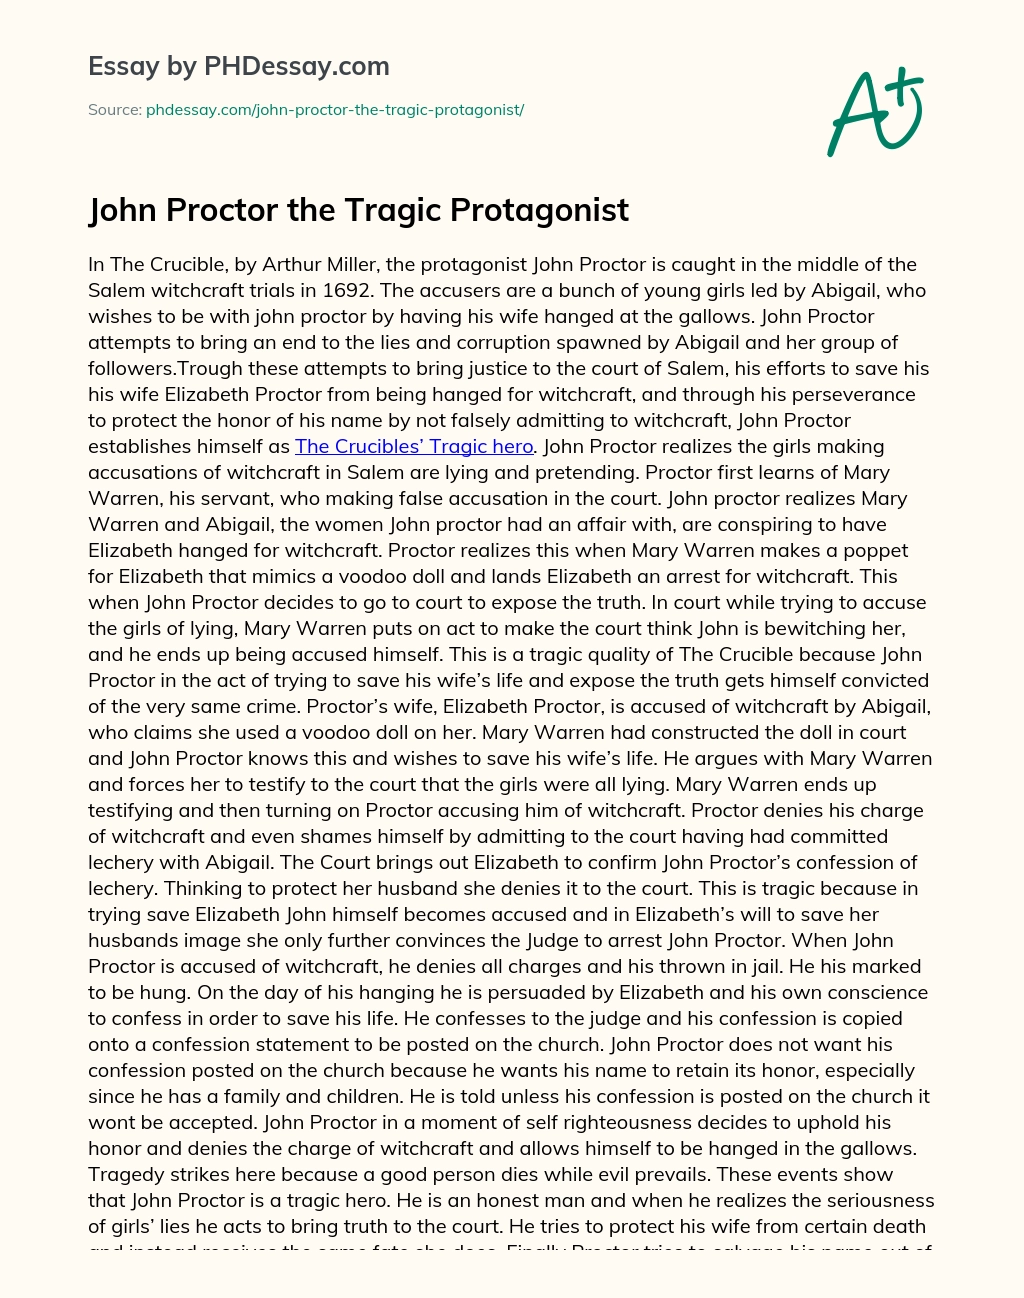 John Proctor the Tragic Protagonist essay